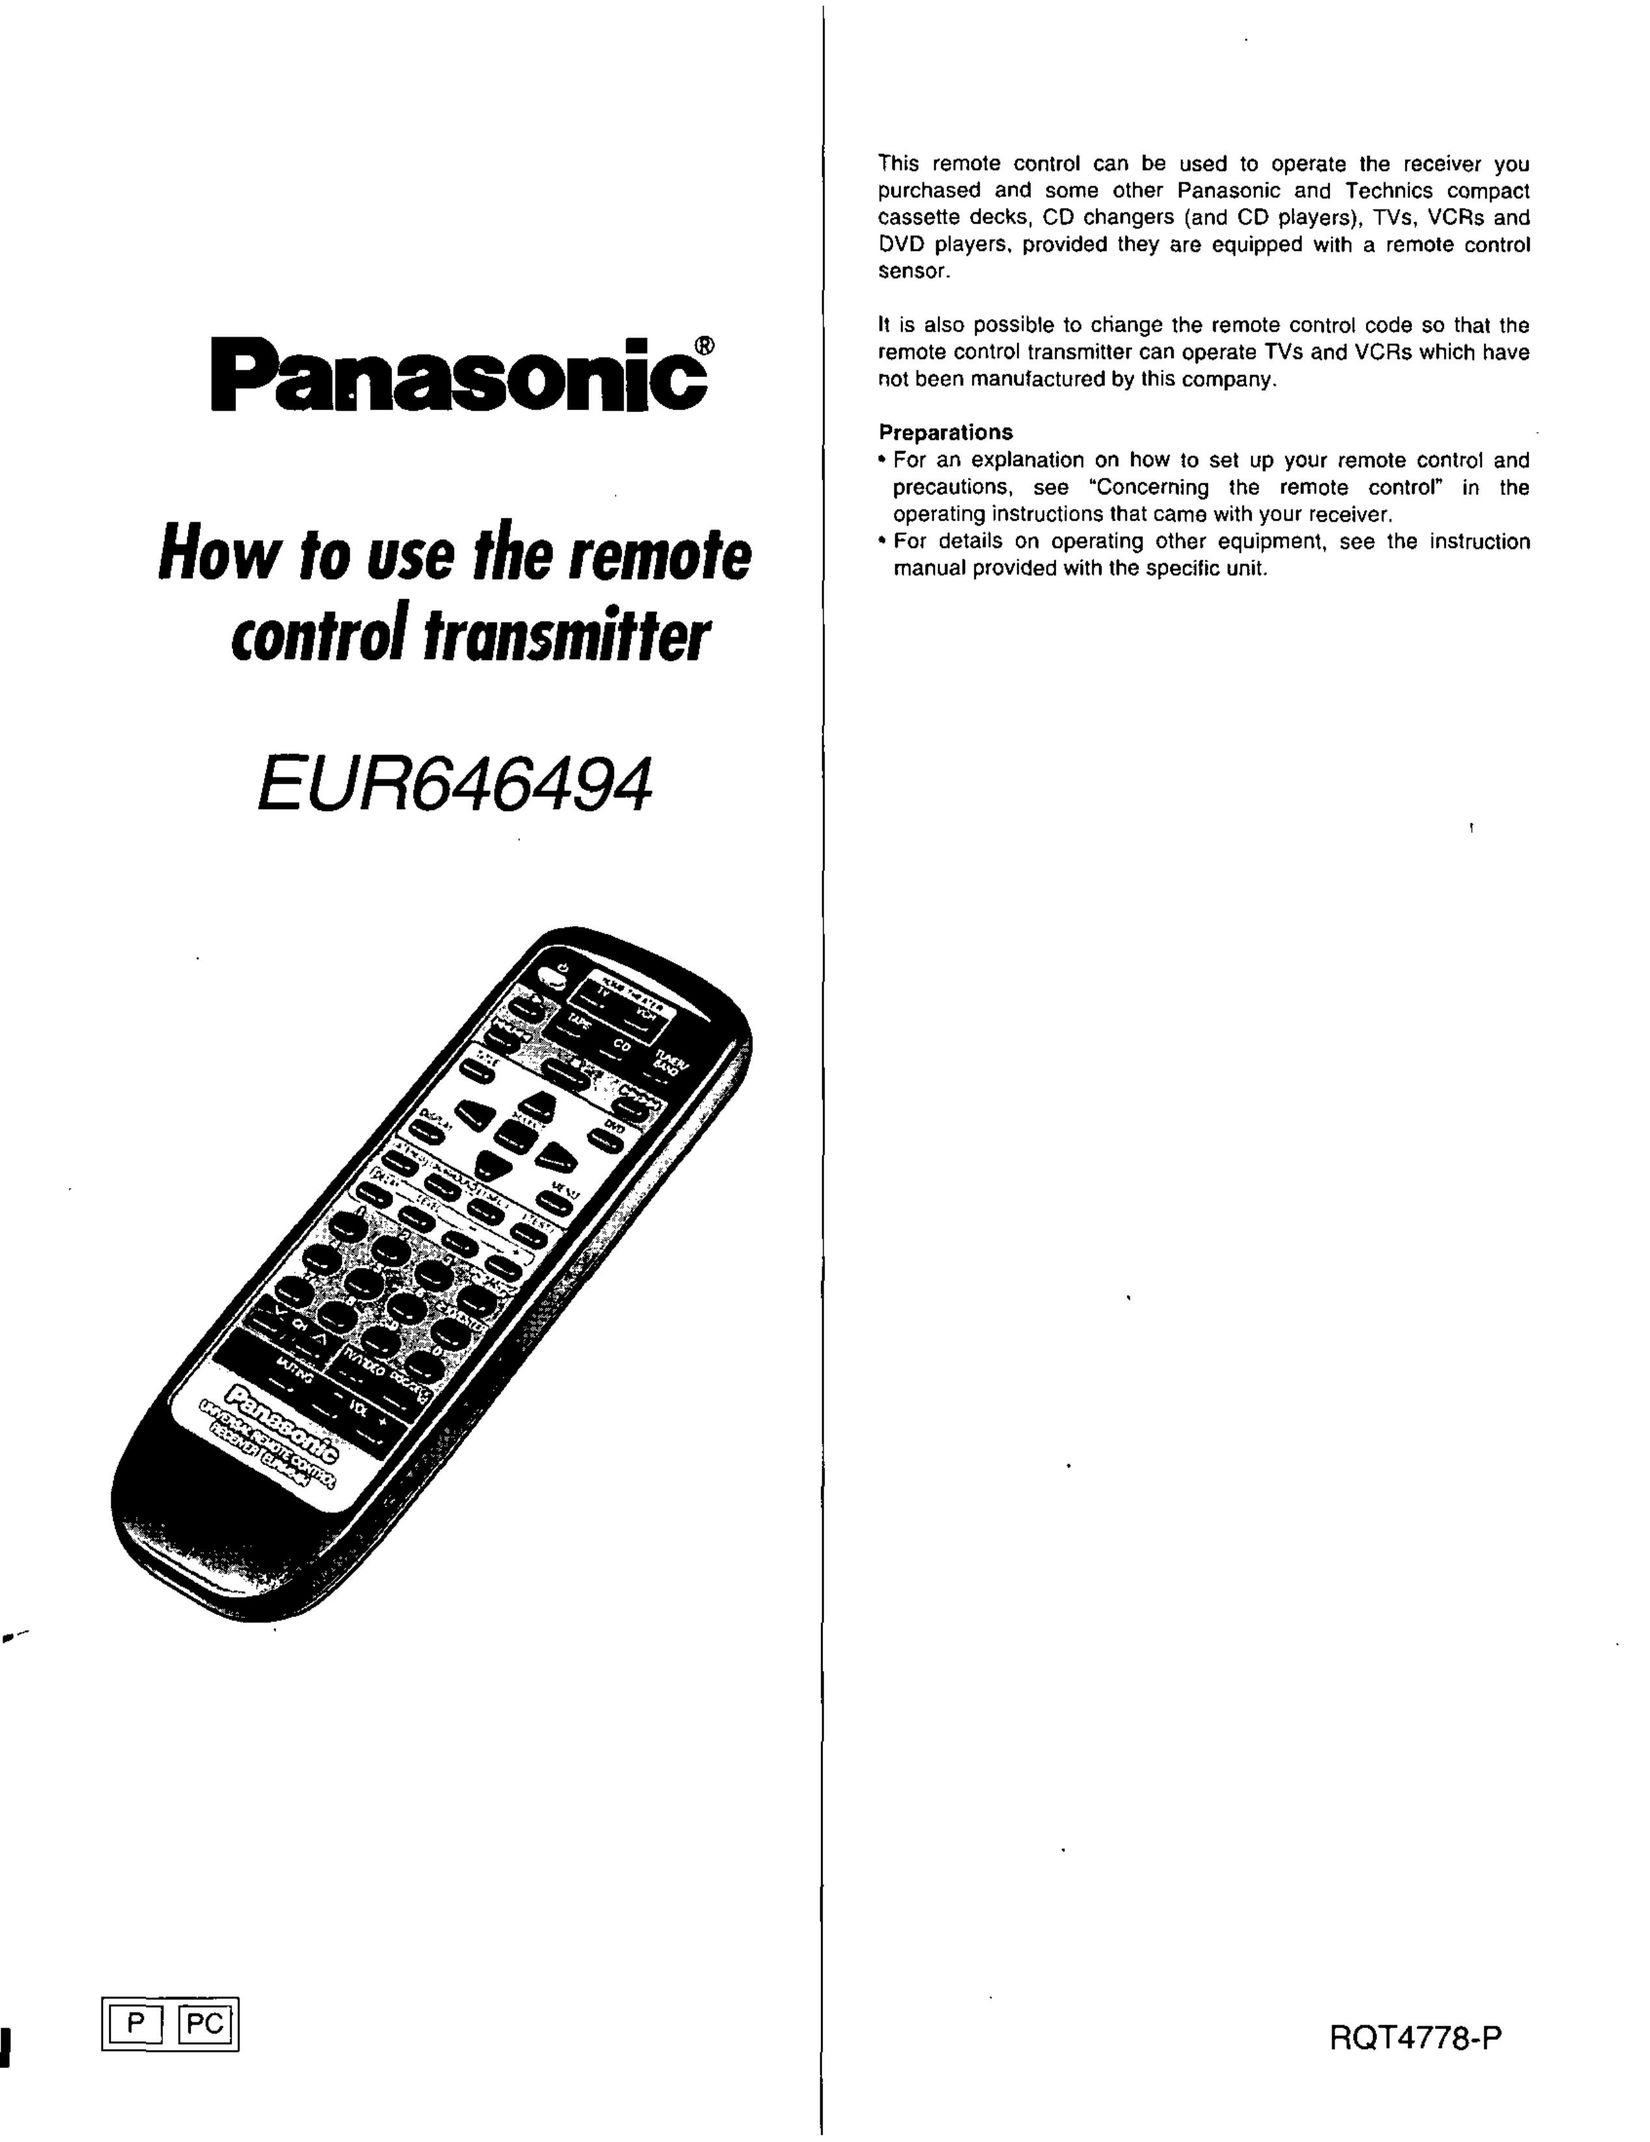 Panasonic EUR646494 Universal Remote User Manual